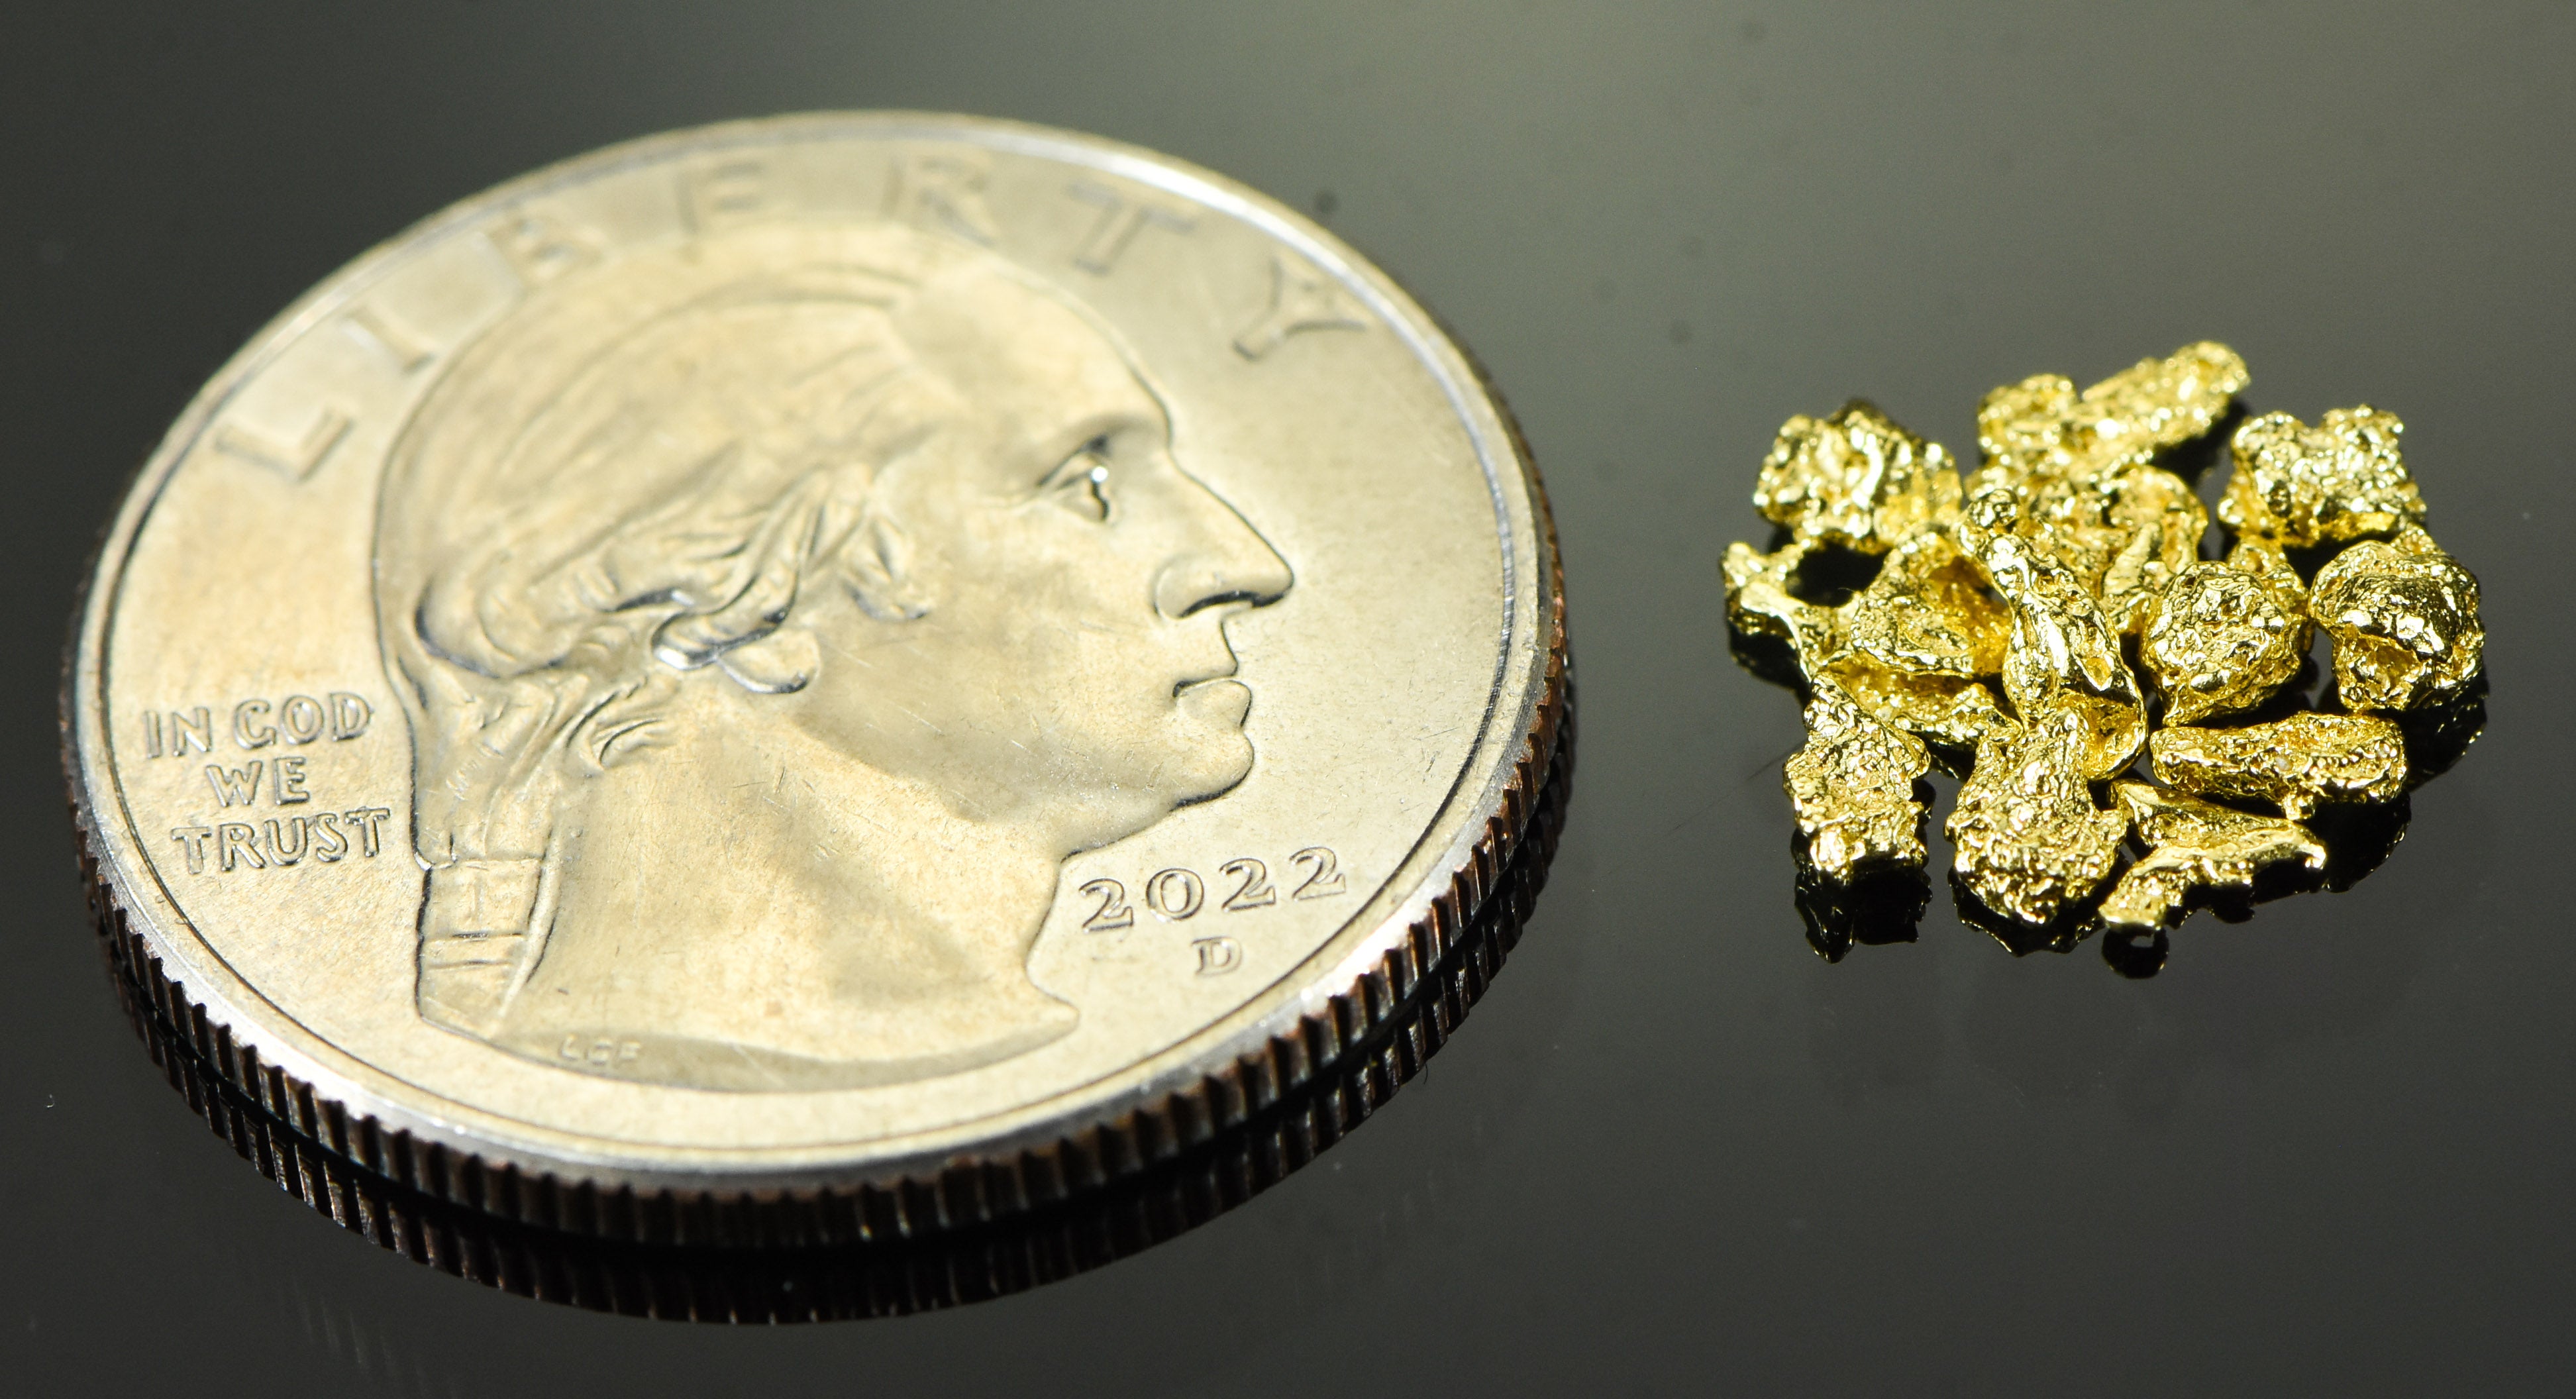 Alaskan Yukon Gold Rush Nuggets 10 Mesh 1 Gram